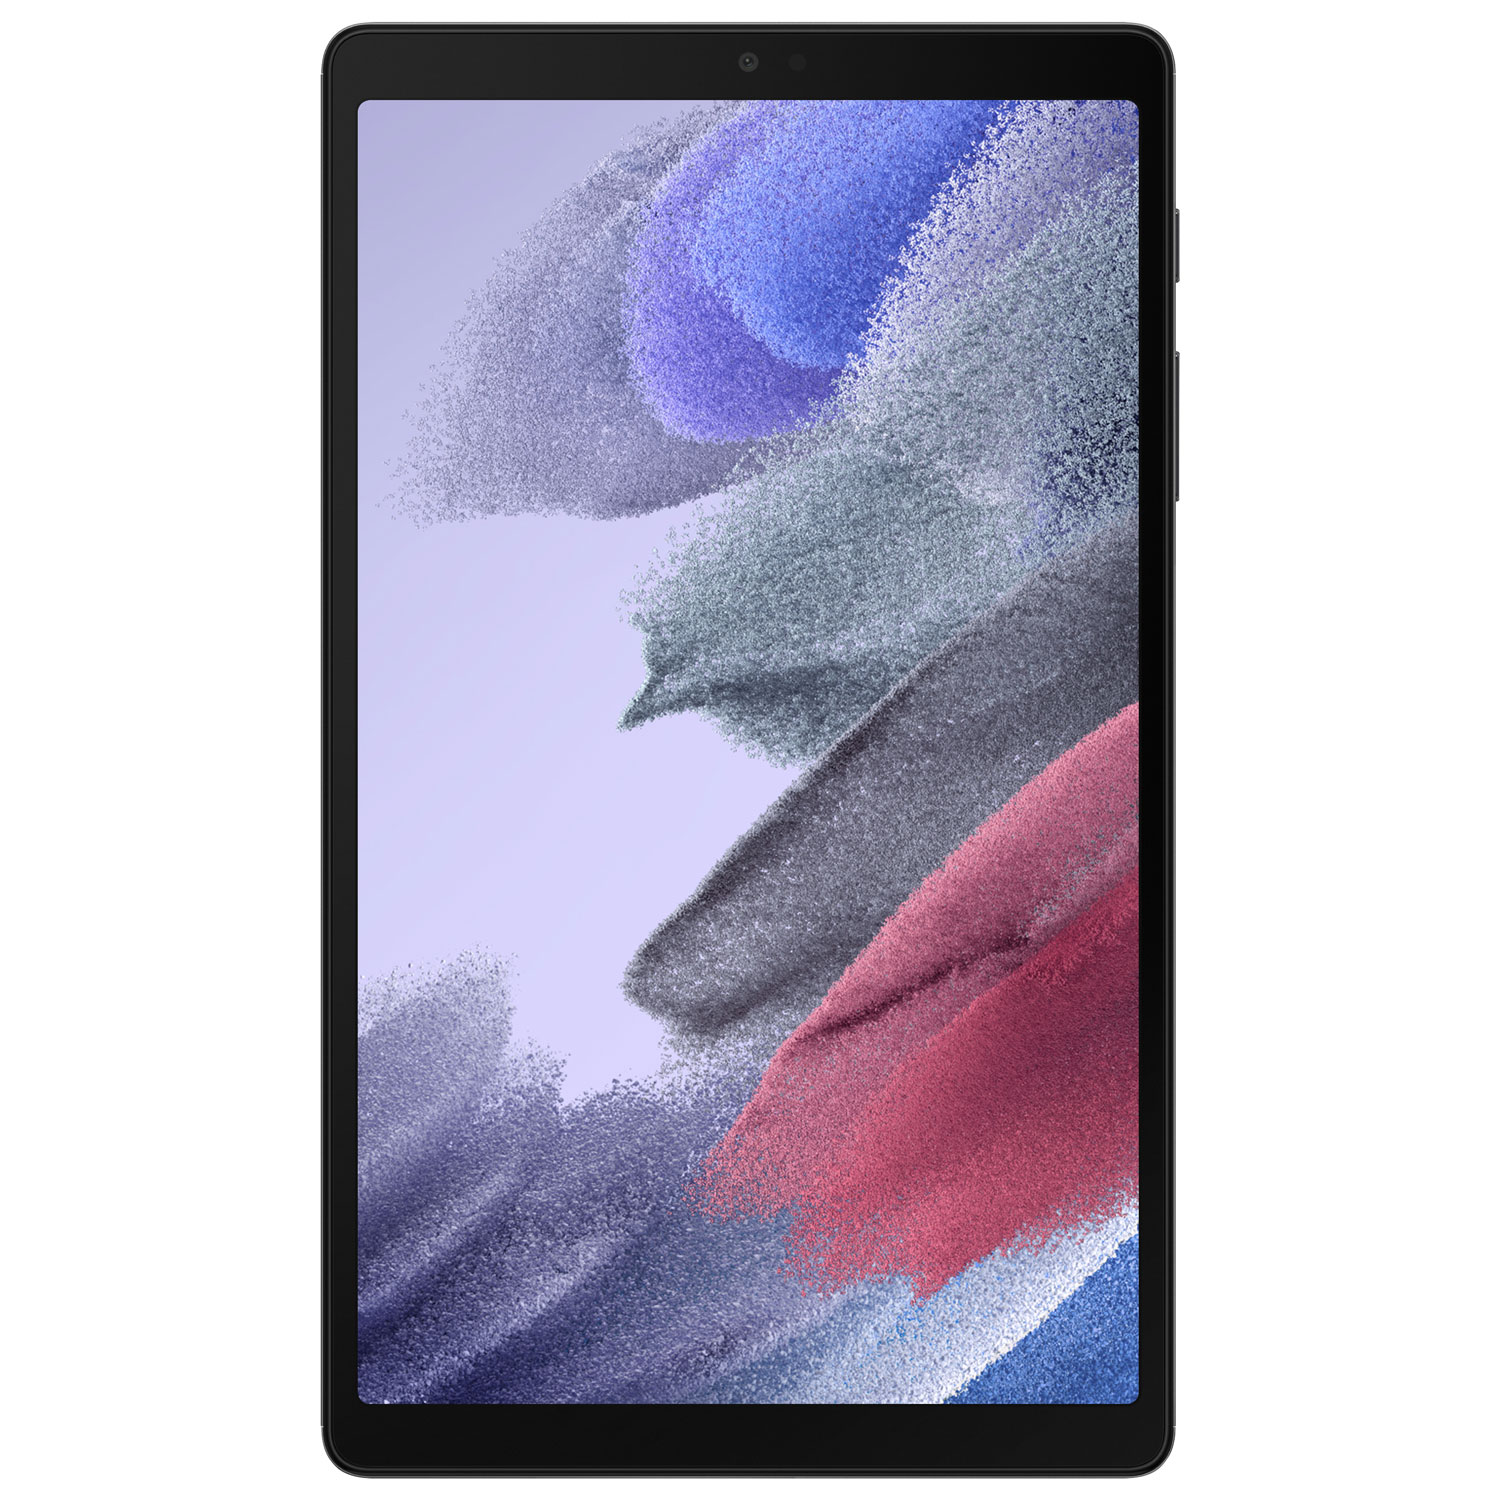 Tablet Samsung Galaxy Tab 3 Lite 7 8gb Android